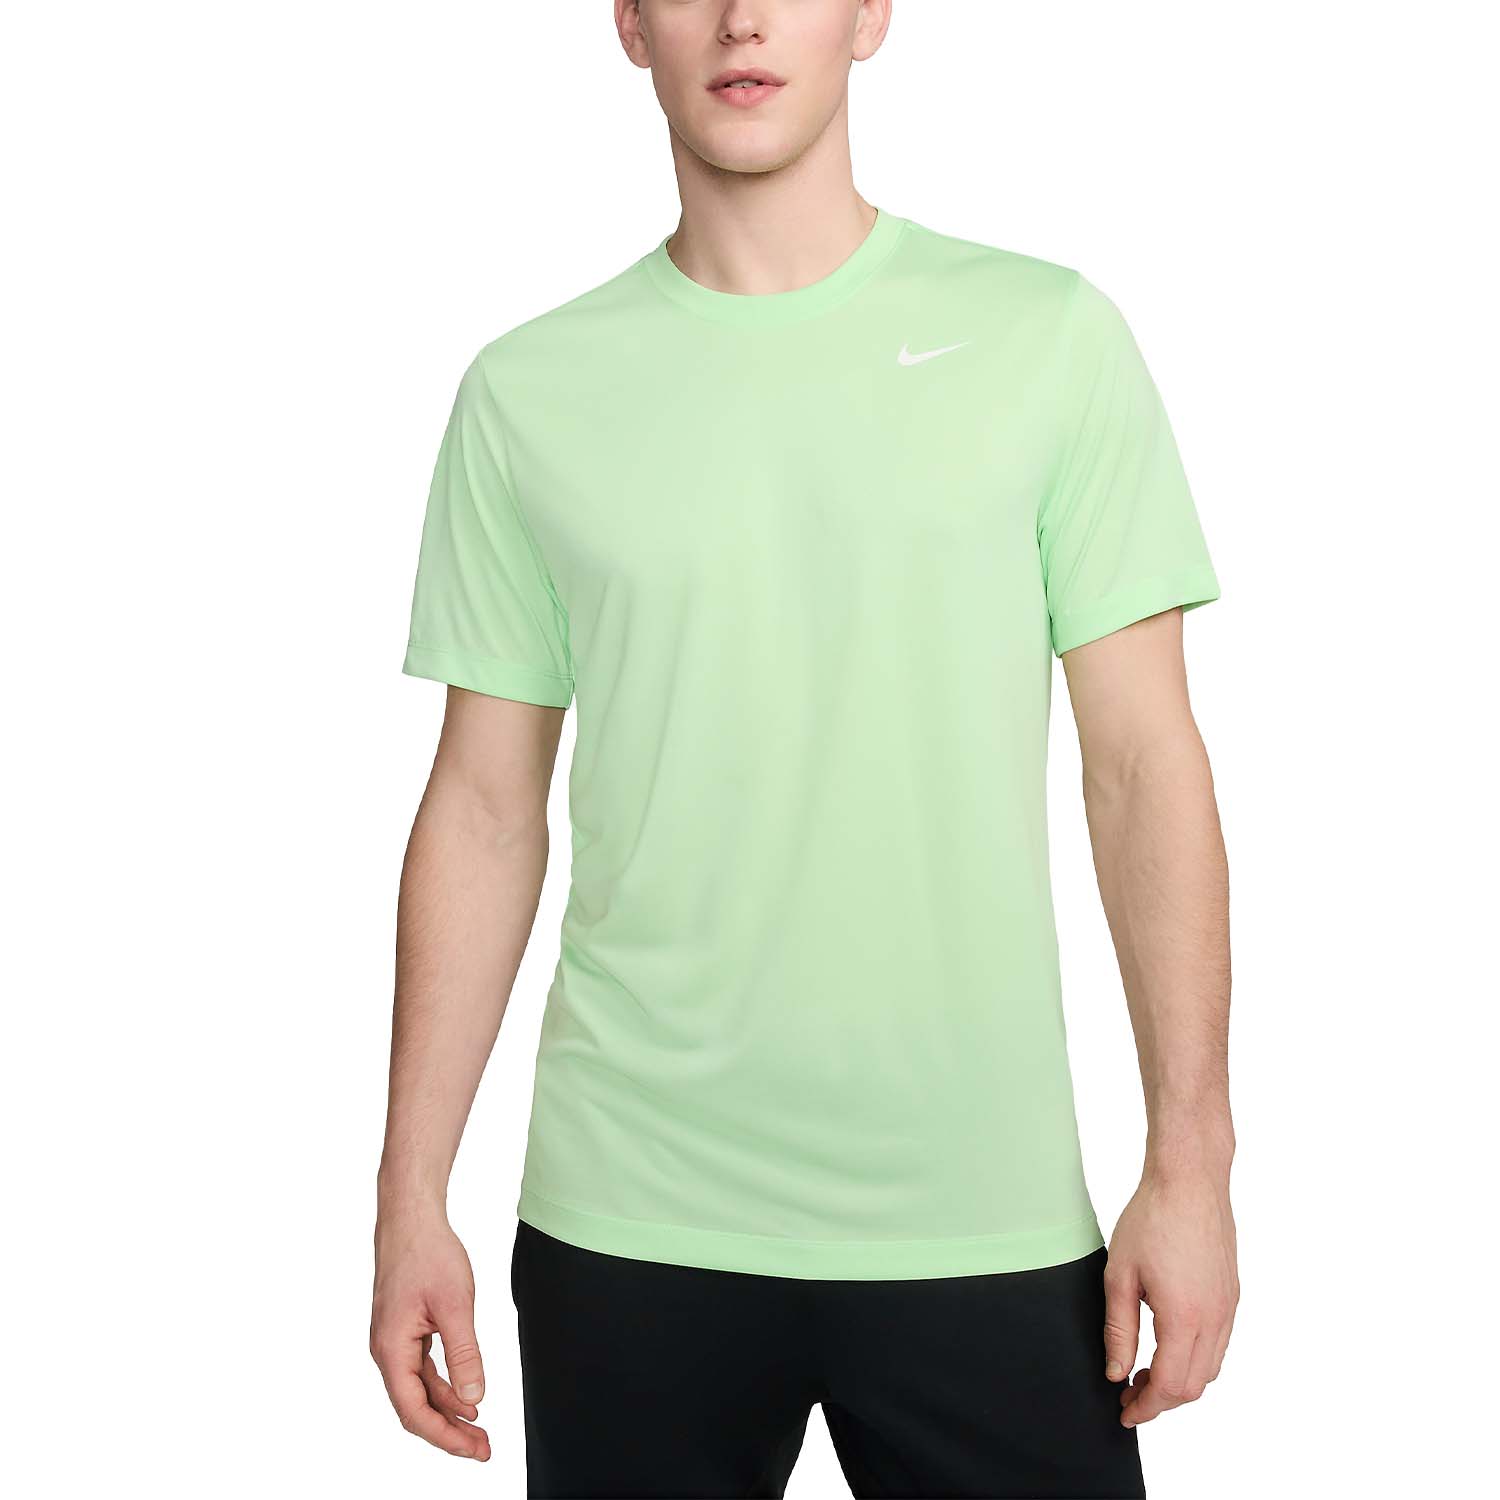 Nike Dri-FIT Legend T-Shirt - Vapor Green/White